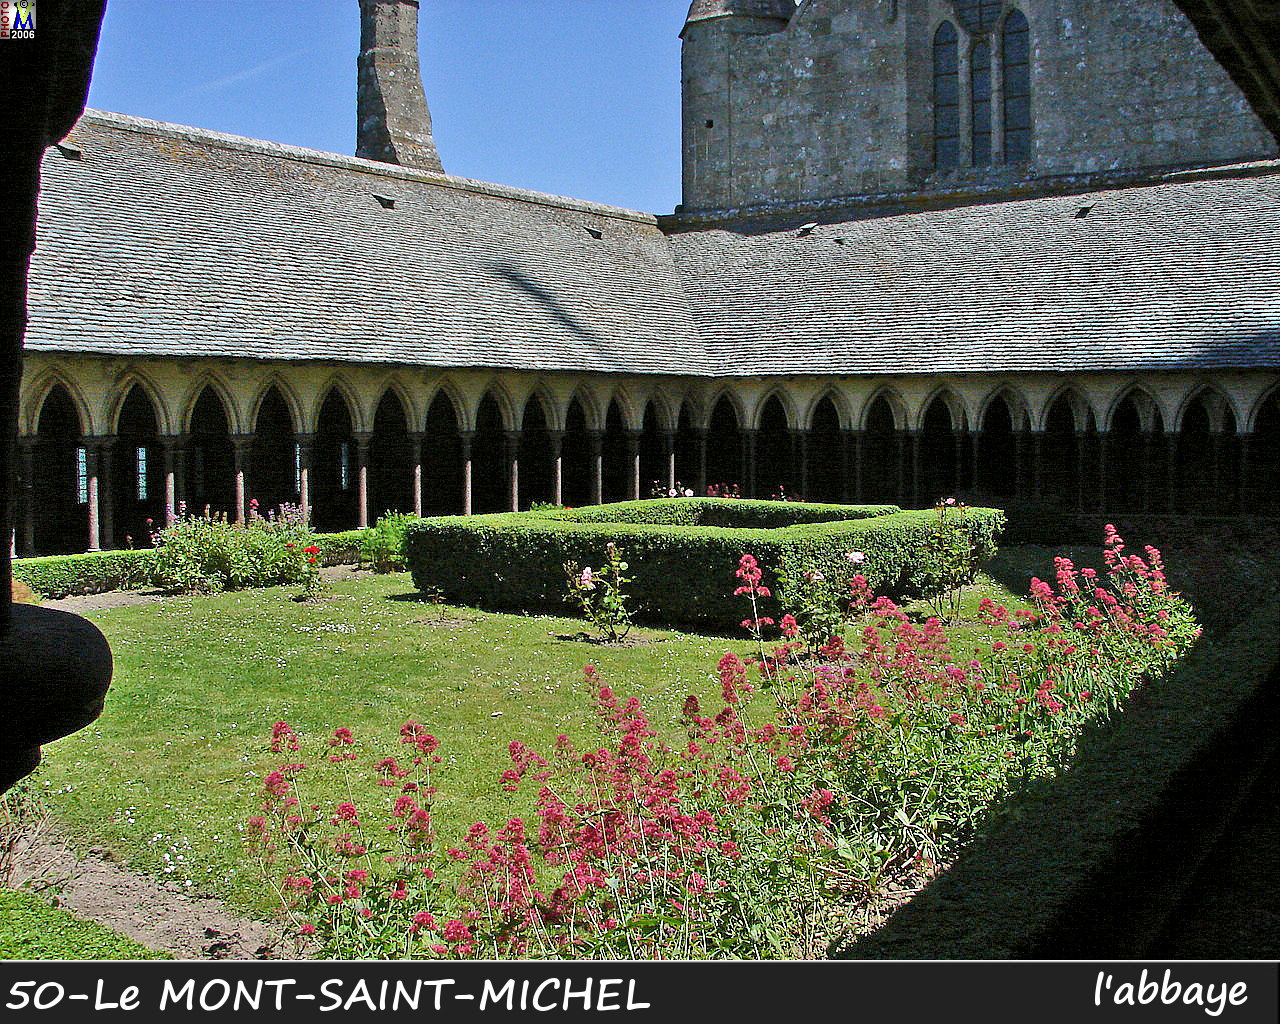 50LE-MONT-ST-MICHEL_abbaye_400.jpg